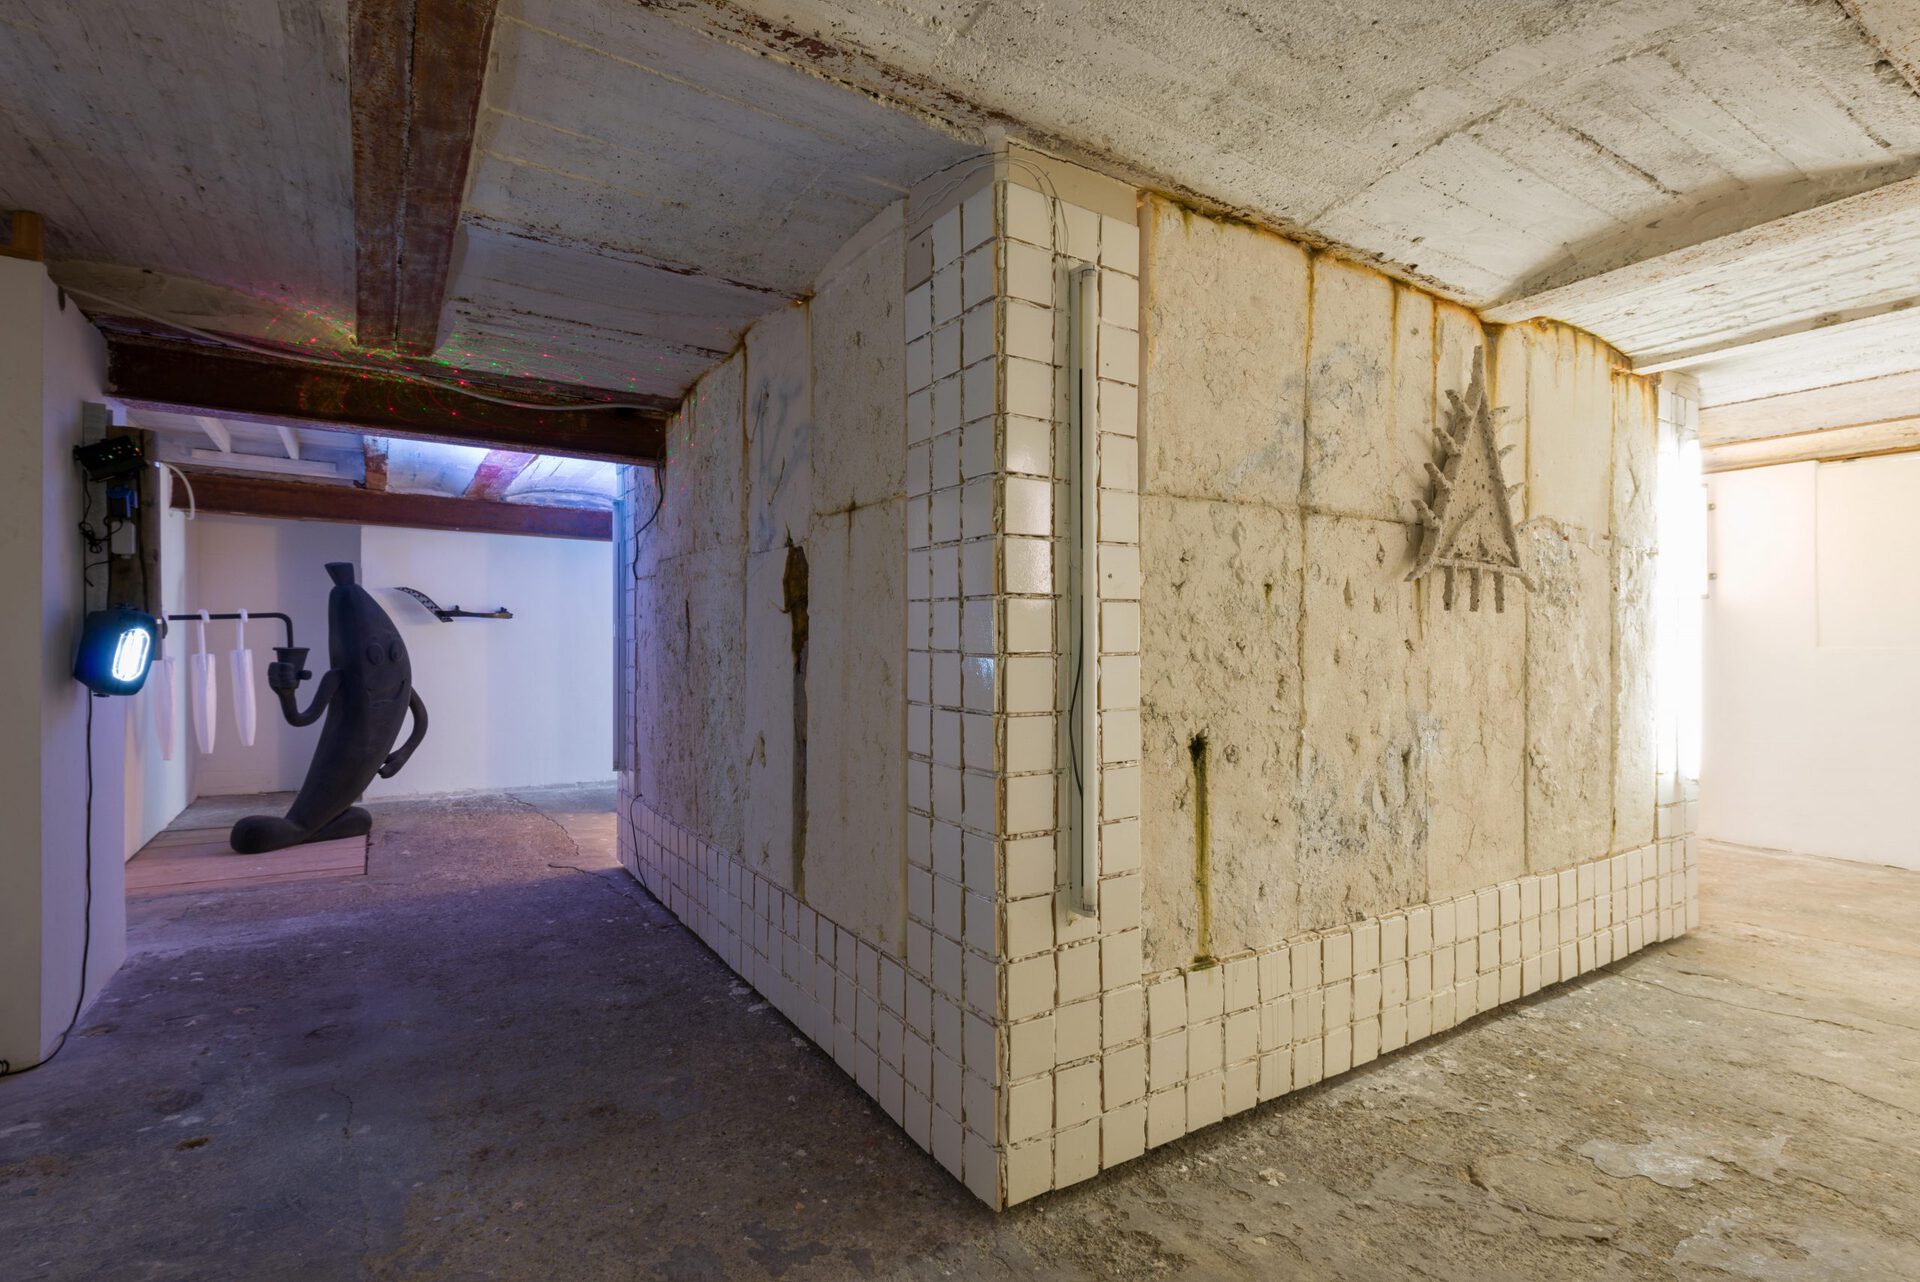 Wall lamp) Stéphane Barbier-Bouvet, Illusions, 2019 ; photo ©Lola Pertsowsky 		- Déborah Bowmann, Study for umbrellas, 2018 ; photo ©Lola Pertsowsky 		  - Héloïse Colrat, Gratte botte, 2021 ; photo ©Lola Pertsowsky